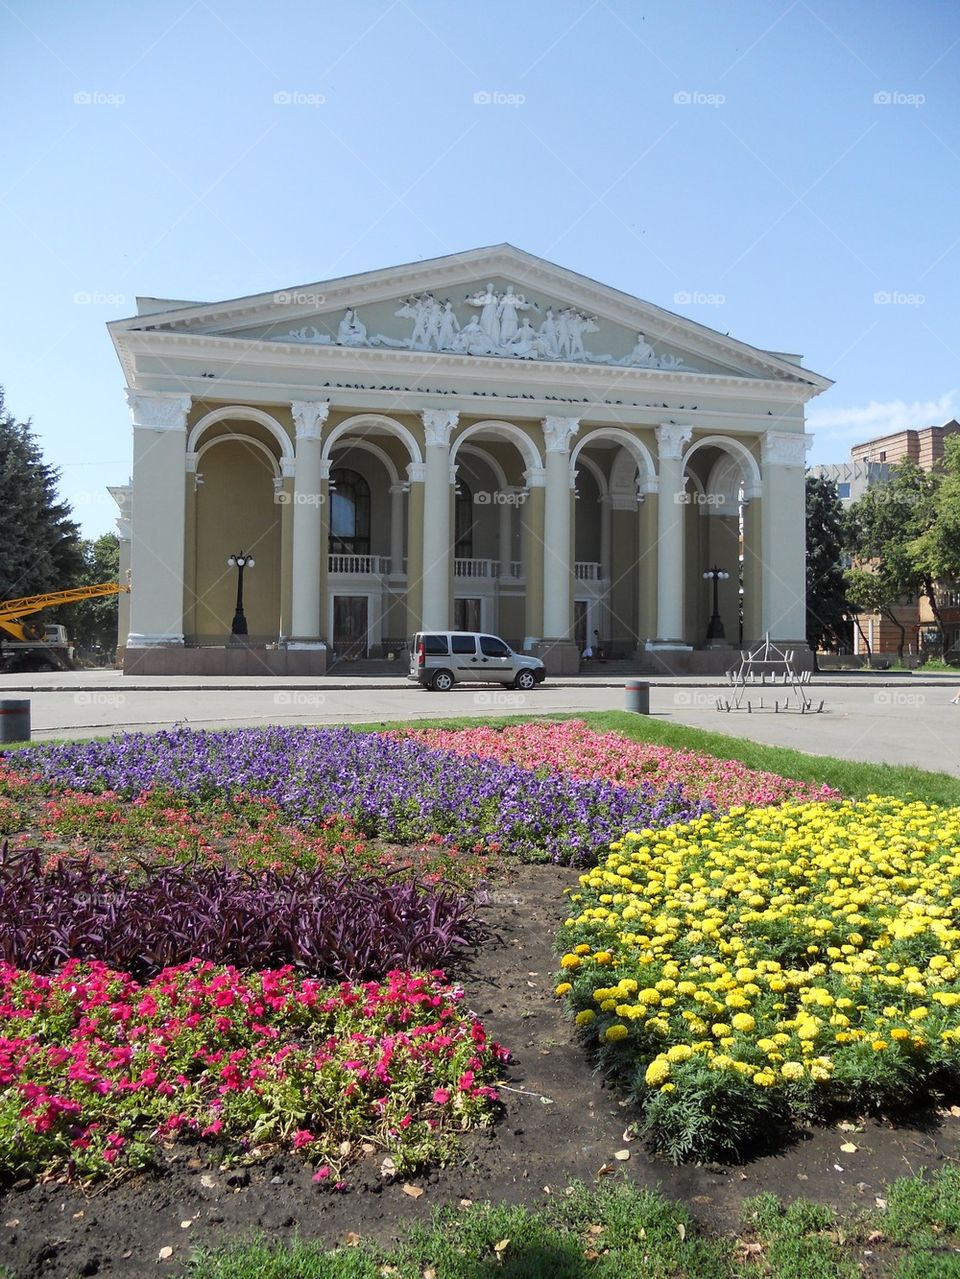 Building in Poltava